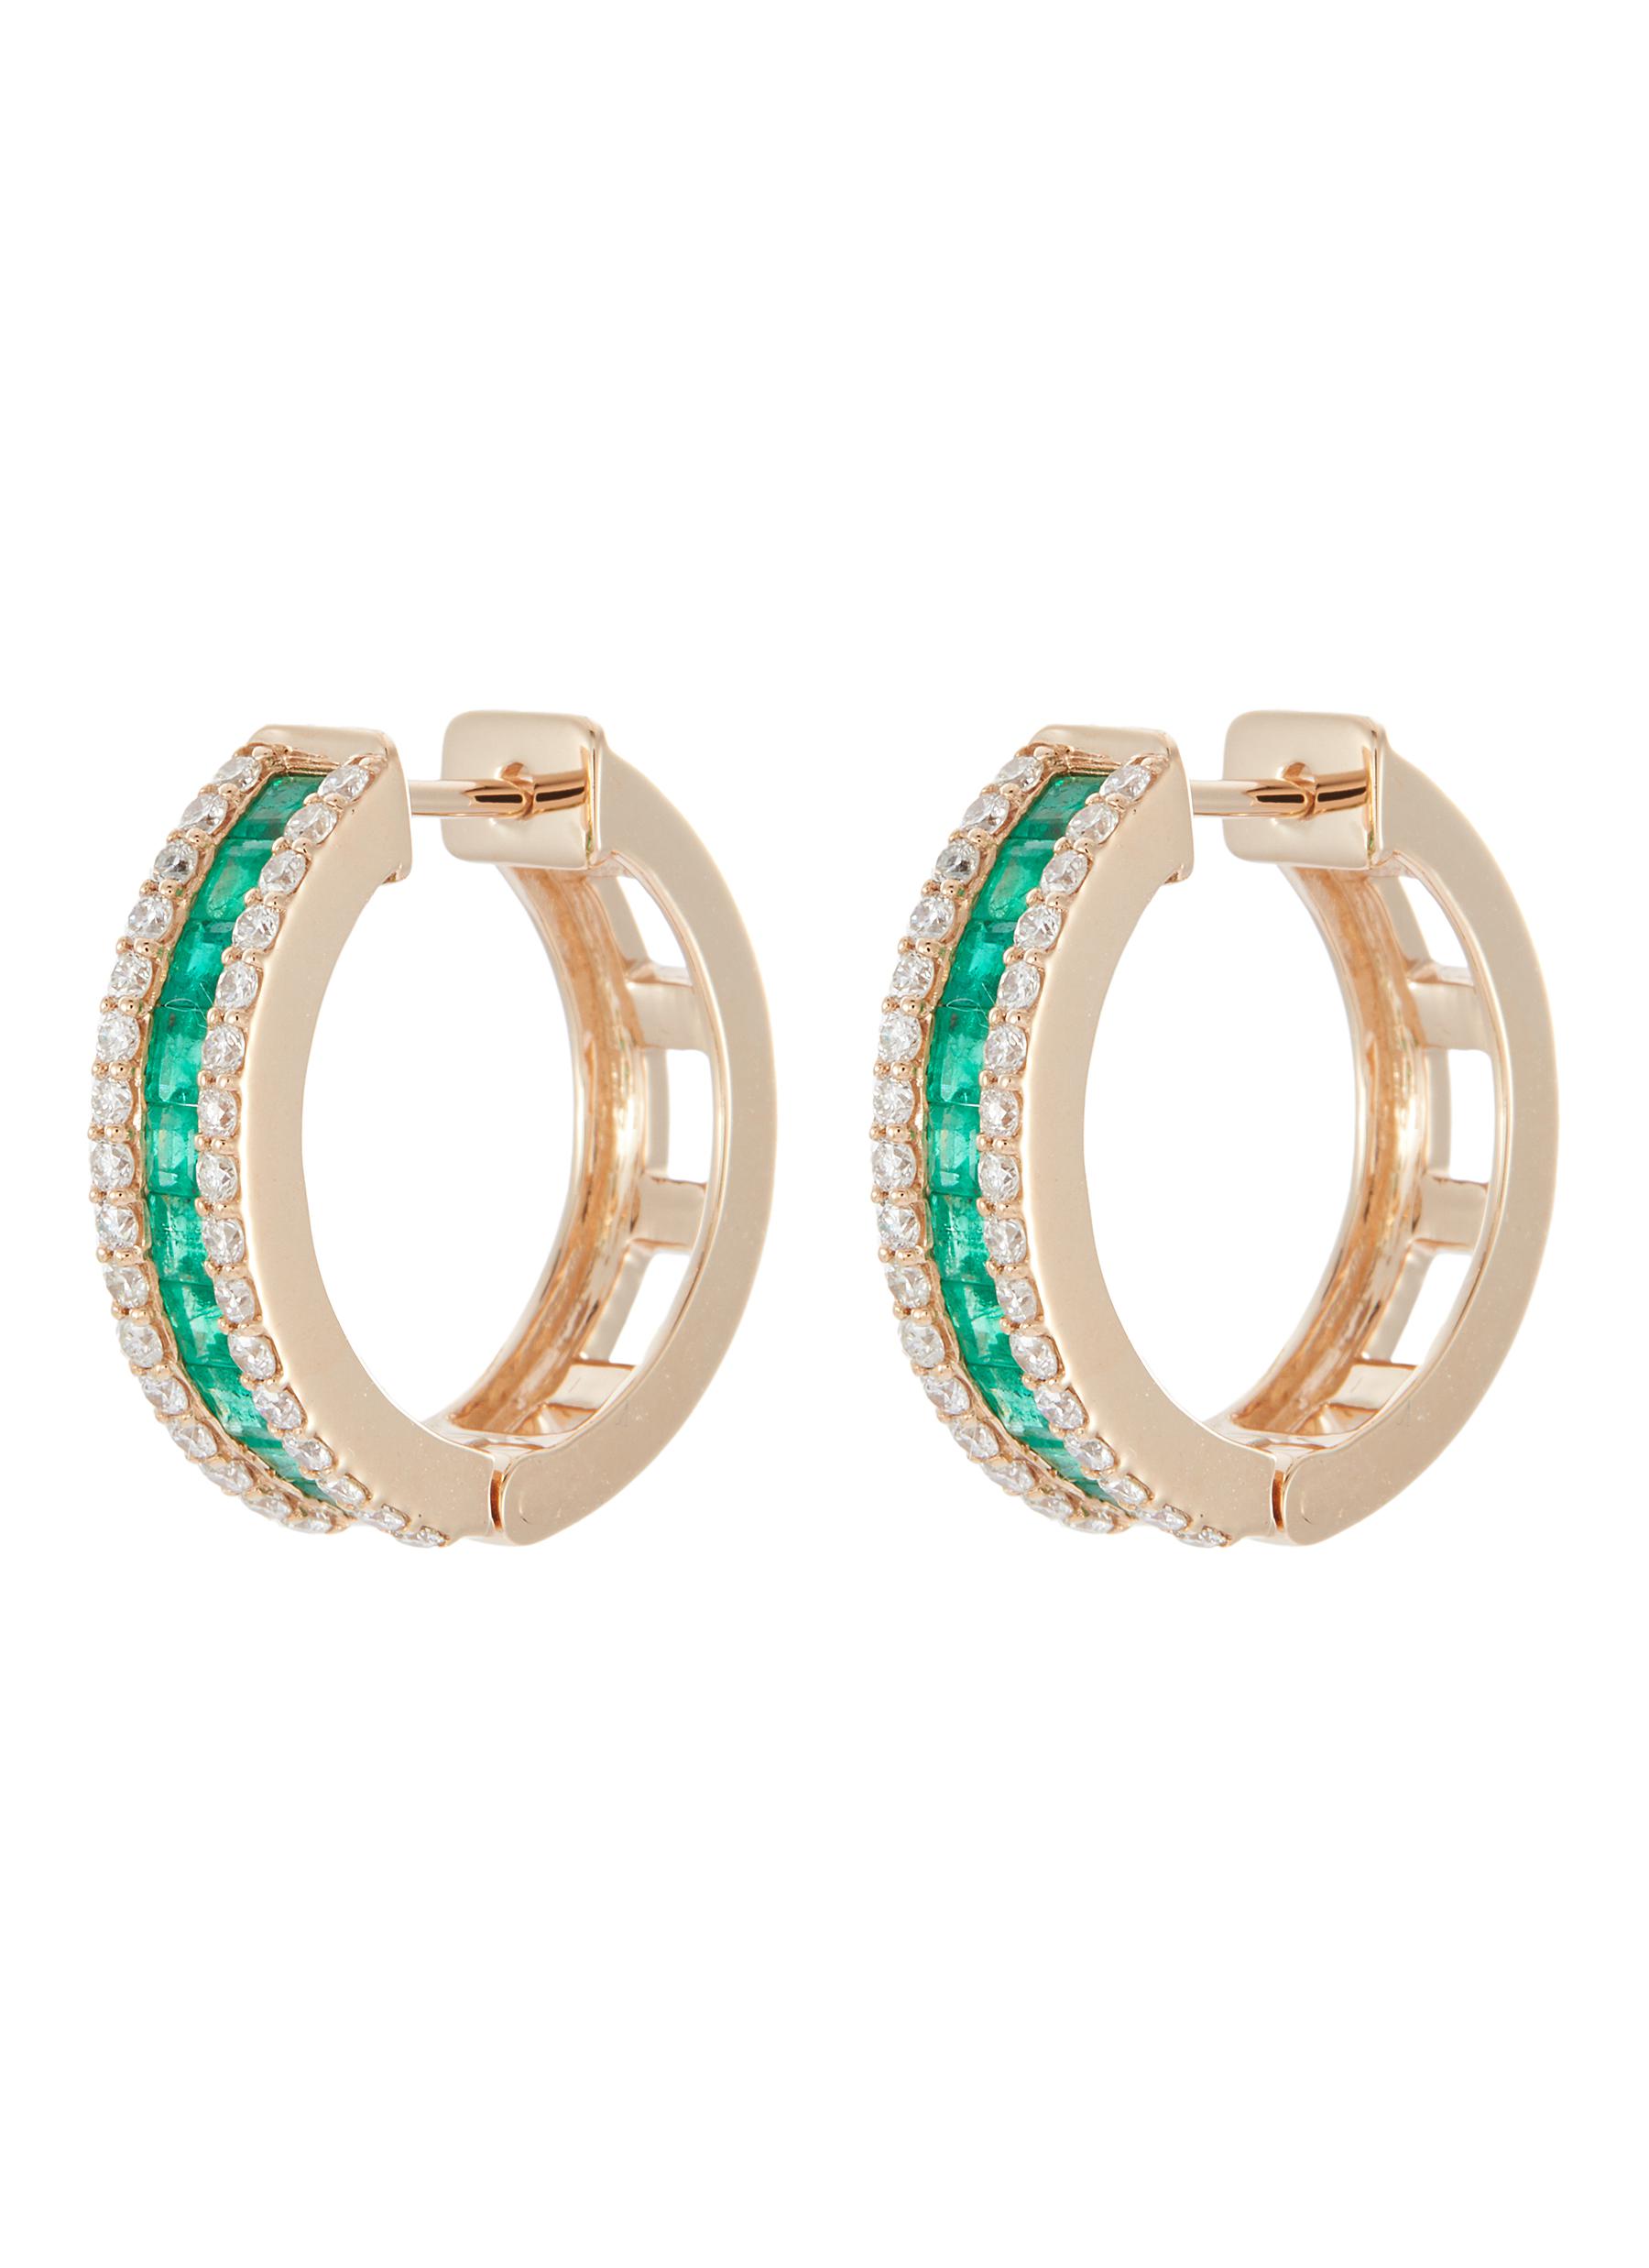 BEE GODDESS 'Mondrian' Diamond Emerald 14k Gold Hoop Earrings